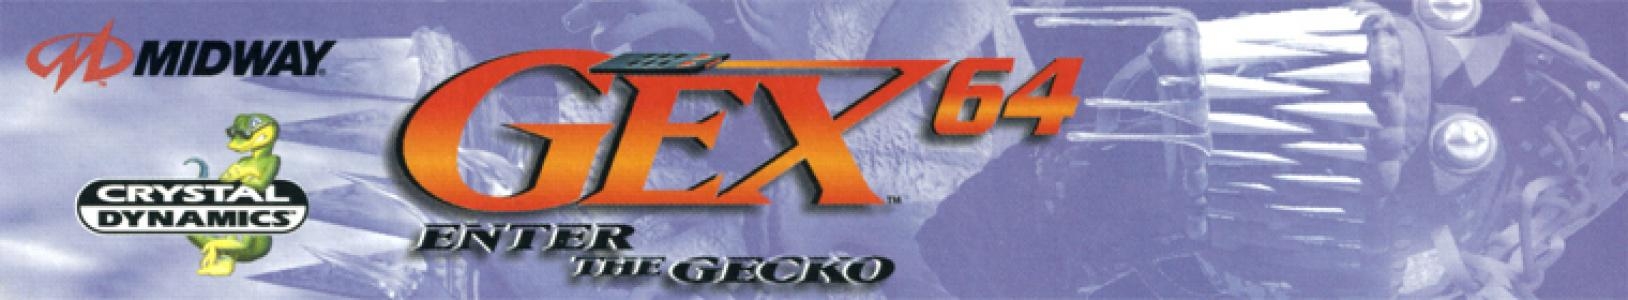 Gex 64: Enter the Gecko banner